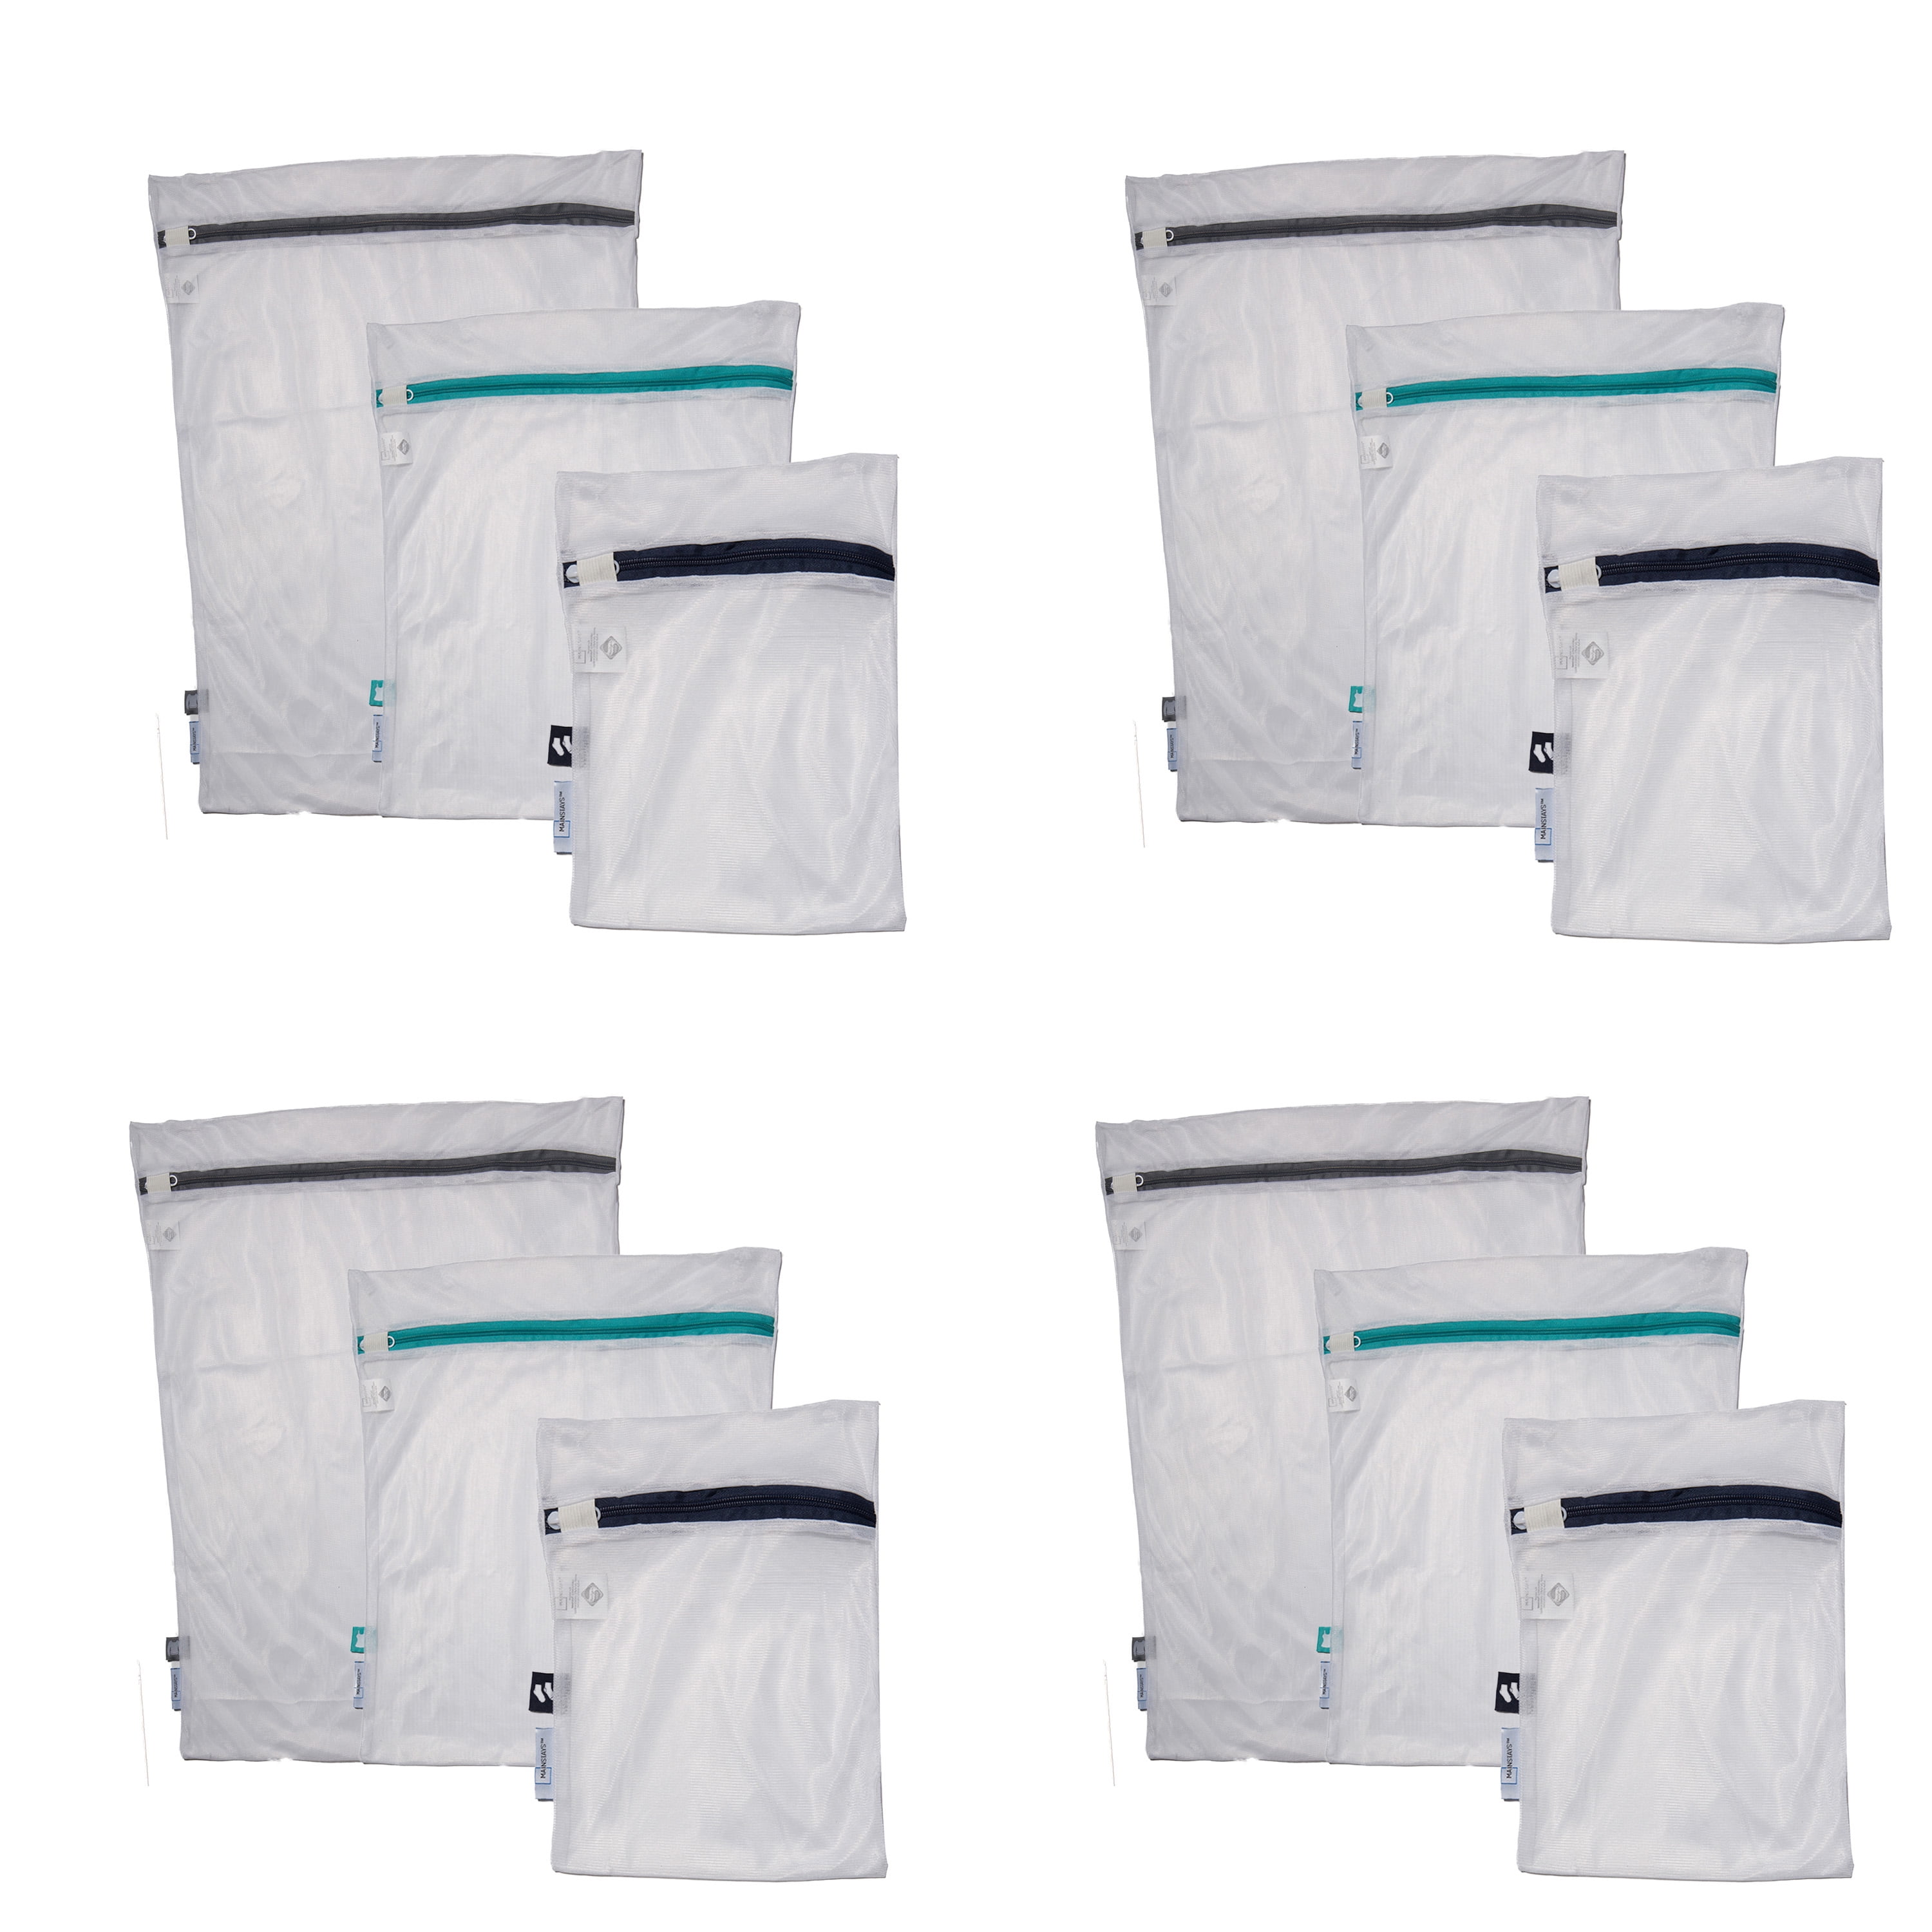 JHIJHOO Set of 4 Premium Laundry Bag Mesh Wash Bags for Wash Bras